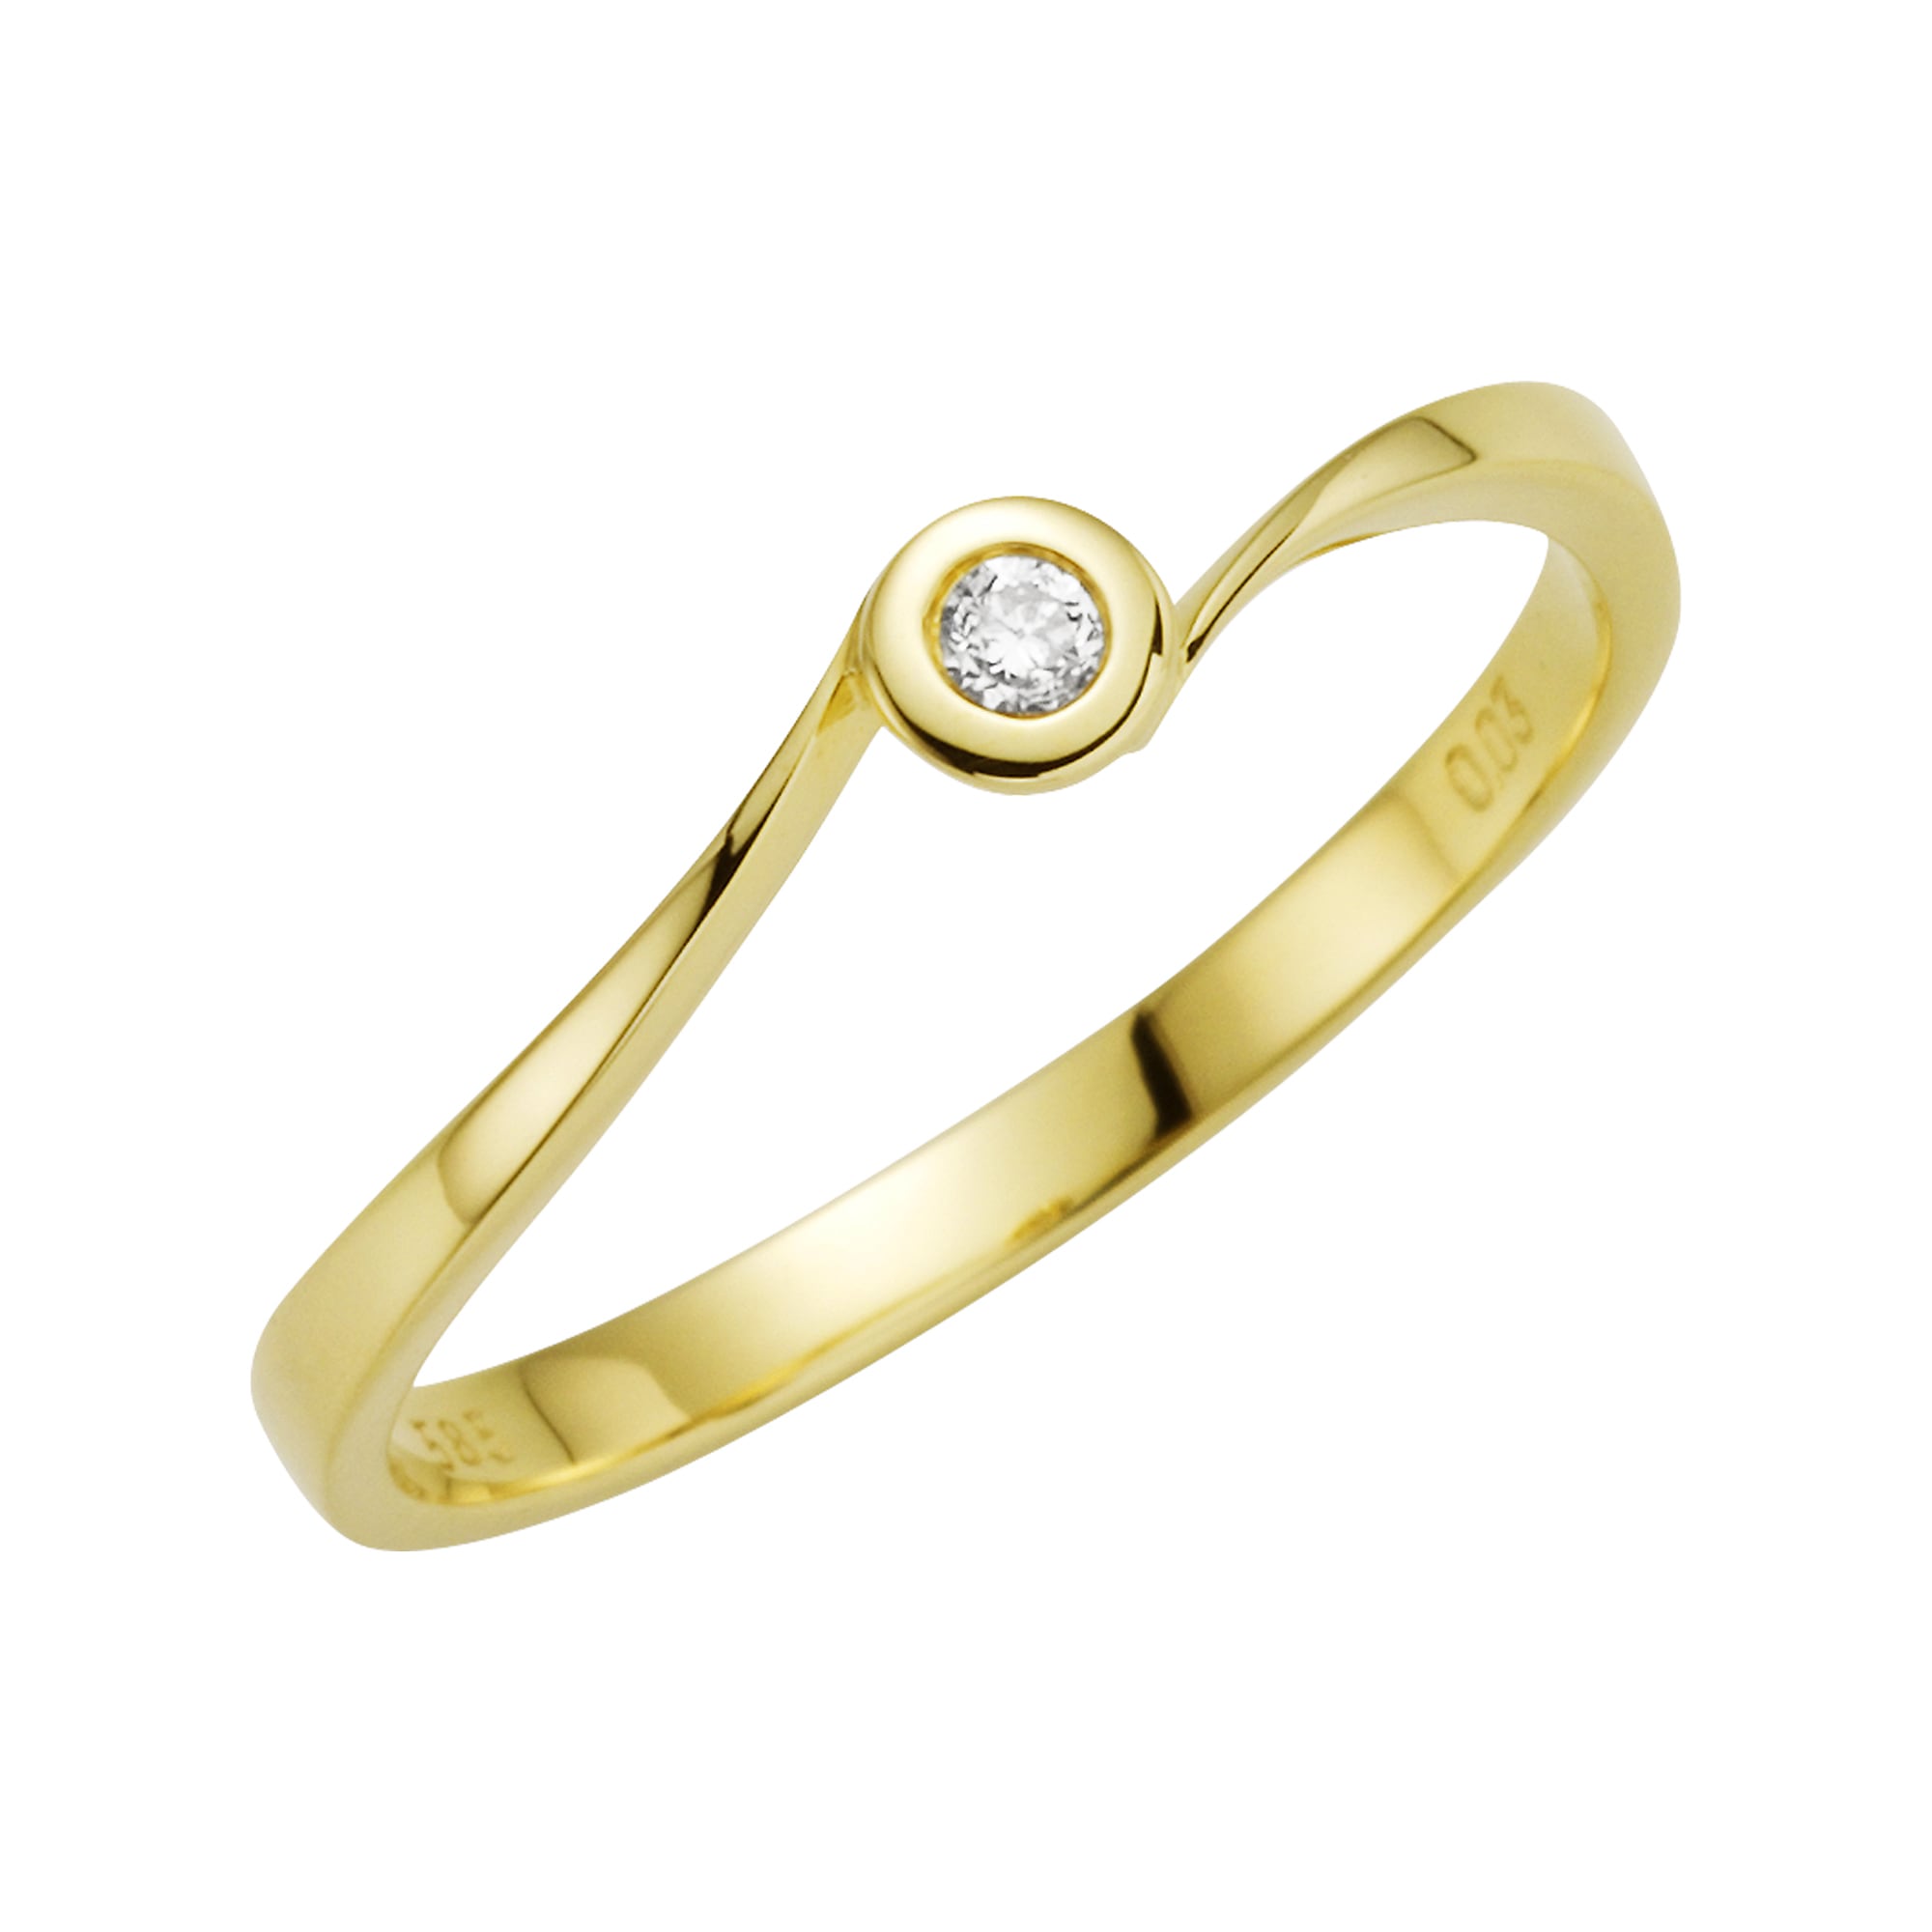 Orolino bestellen »585 0,03ct.« | Fingerring Brillant Gold BAUR